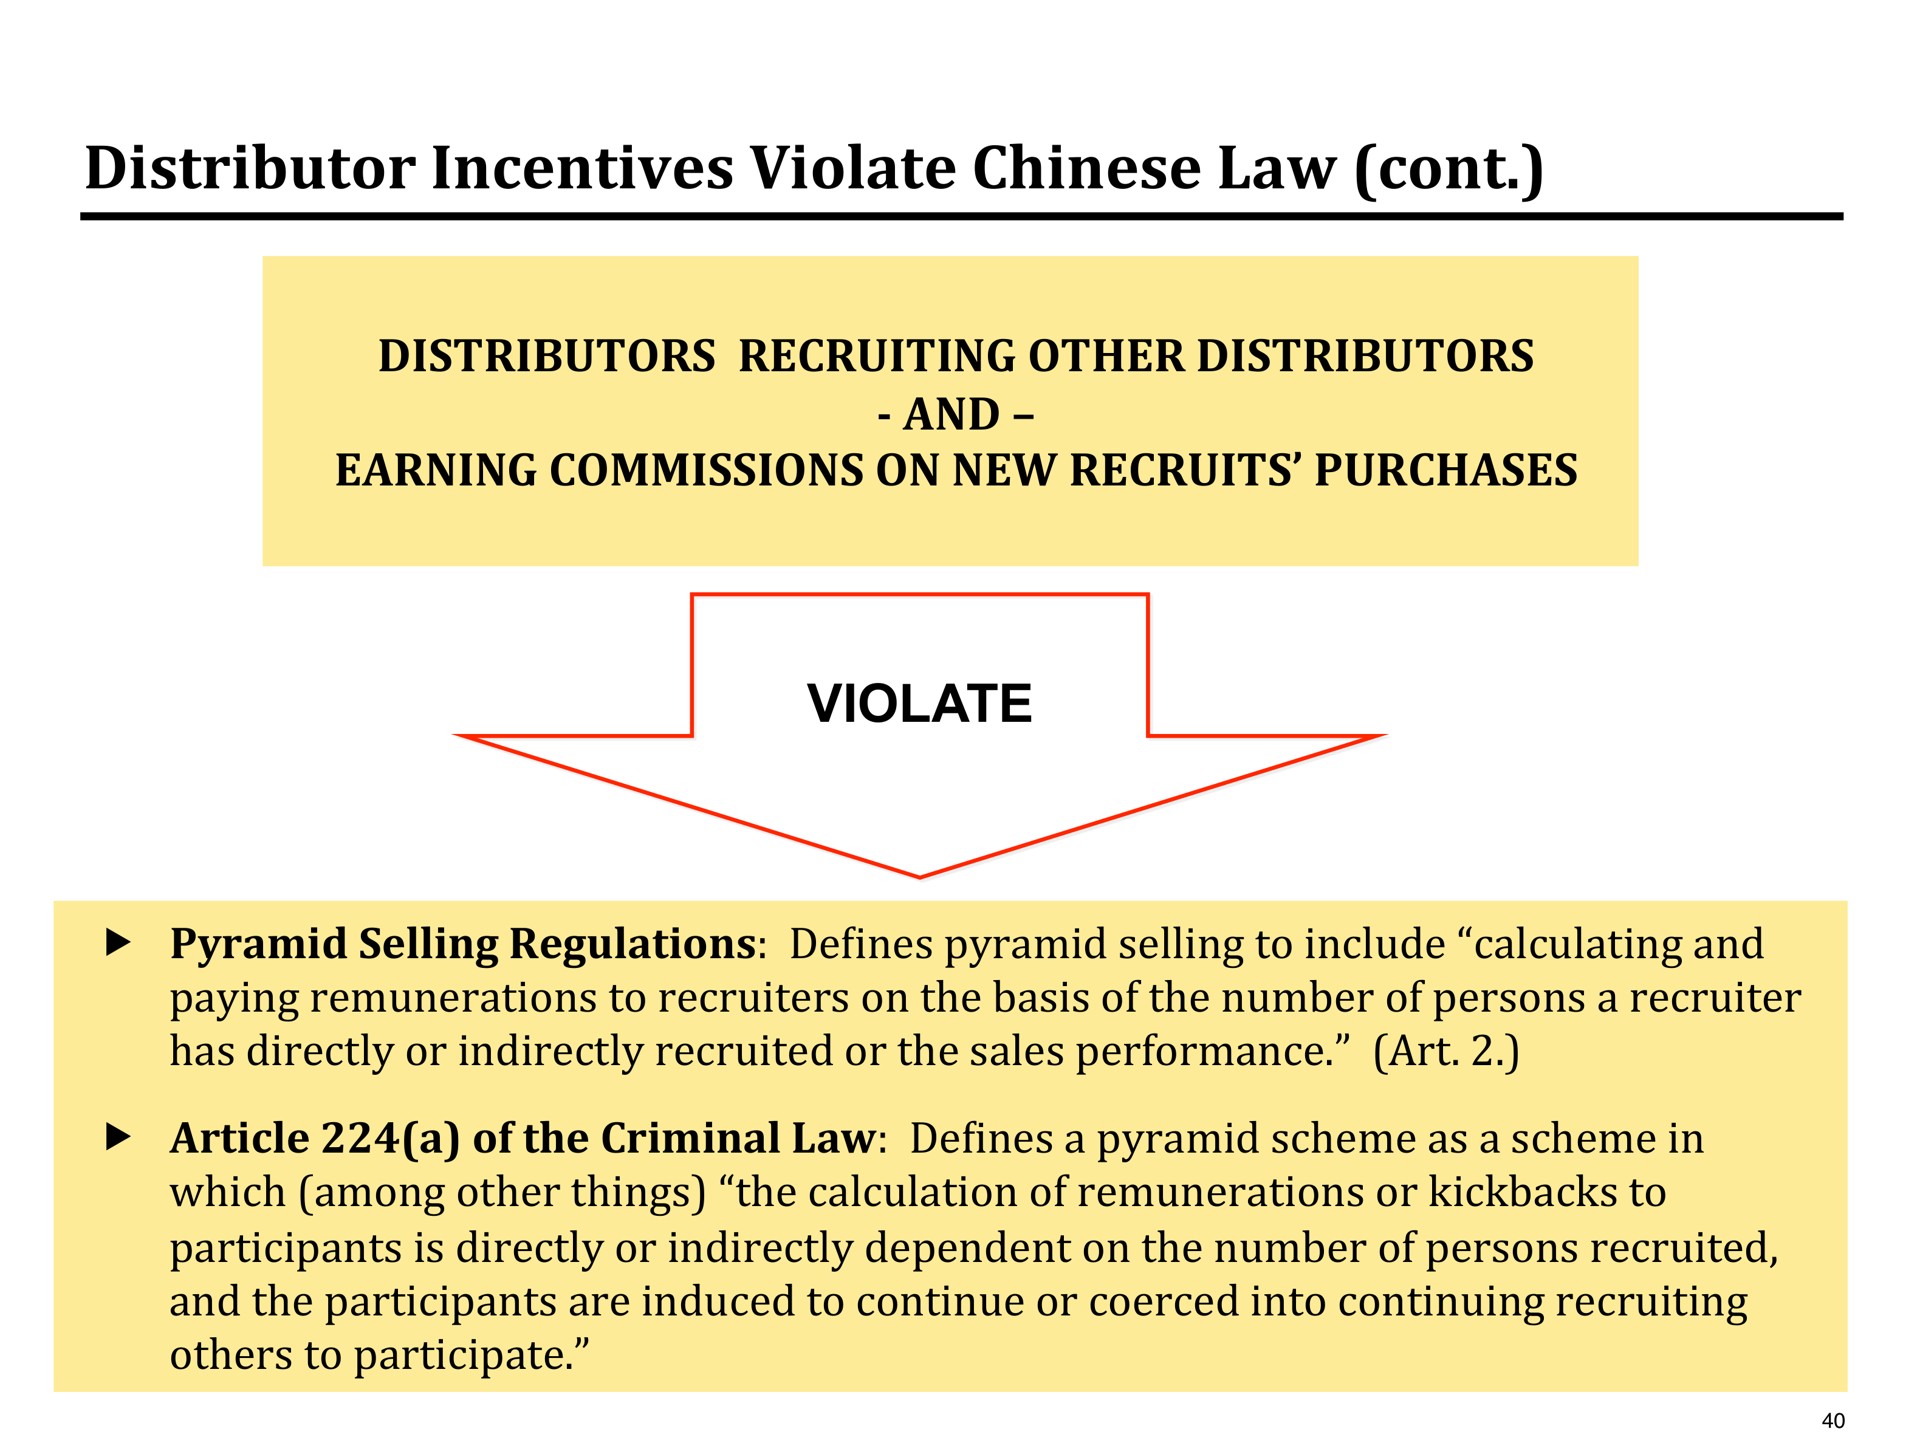 distributor incentives violate law | Pershing Square